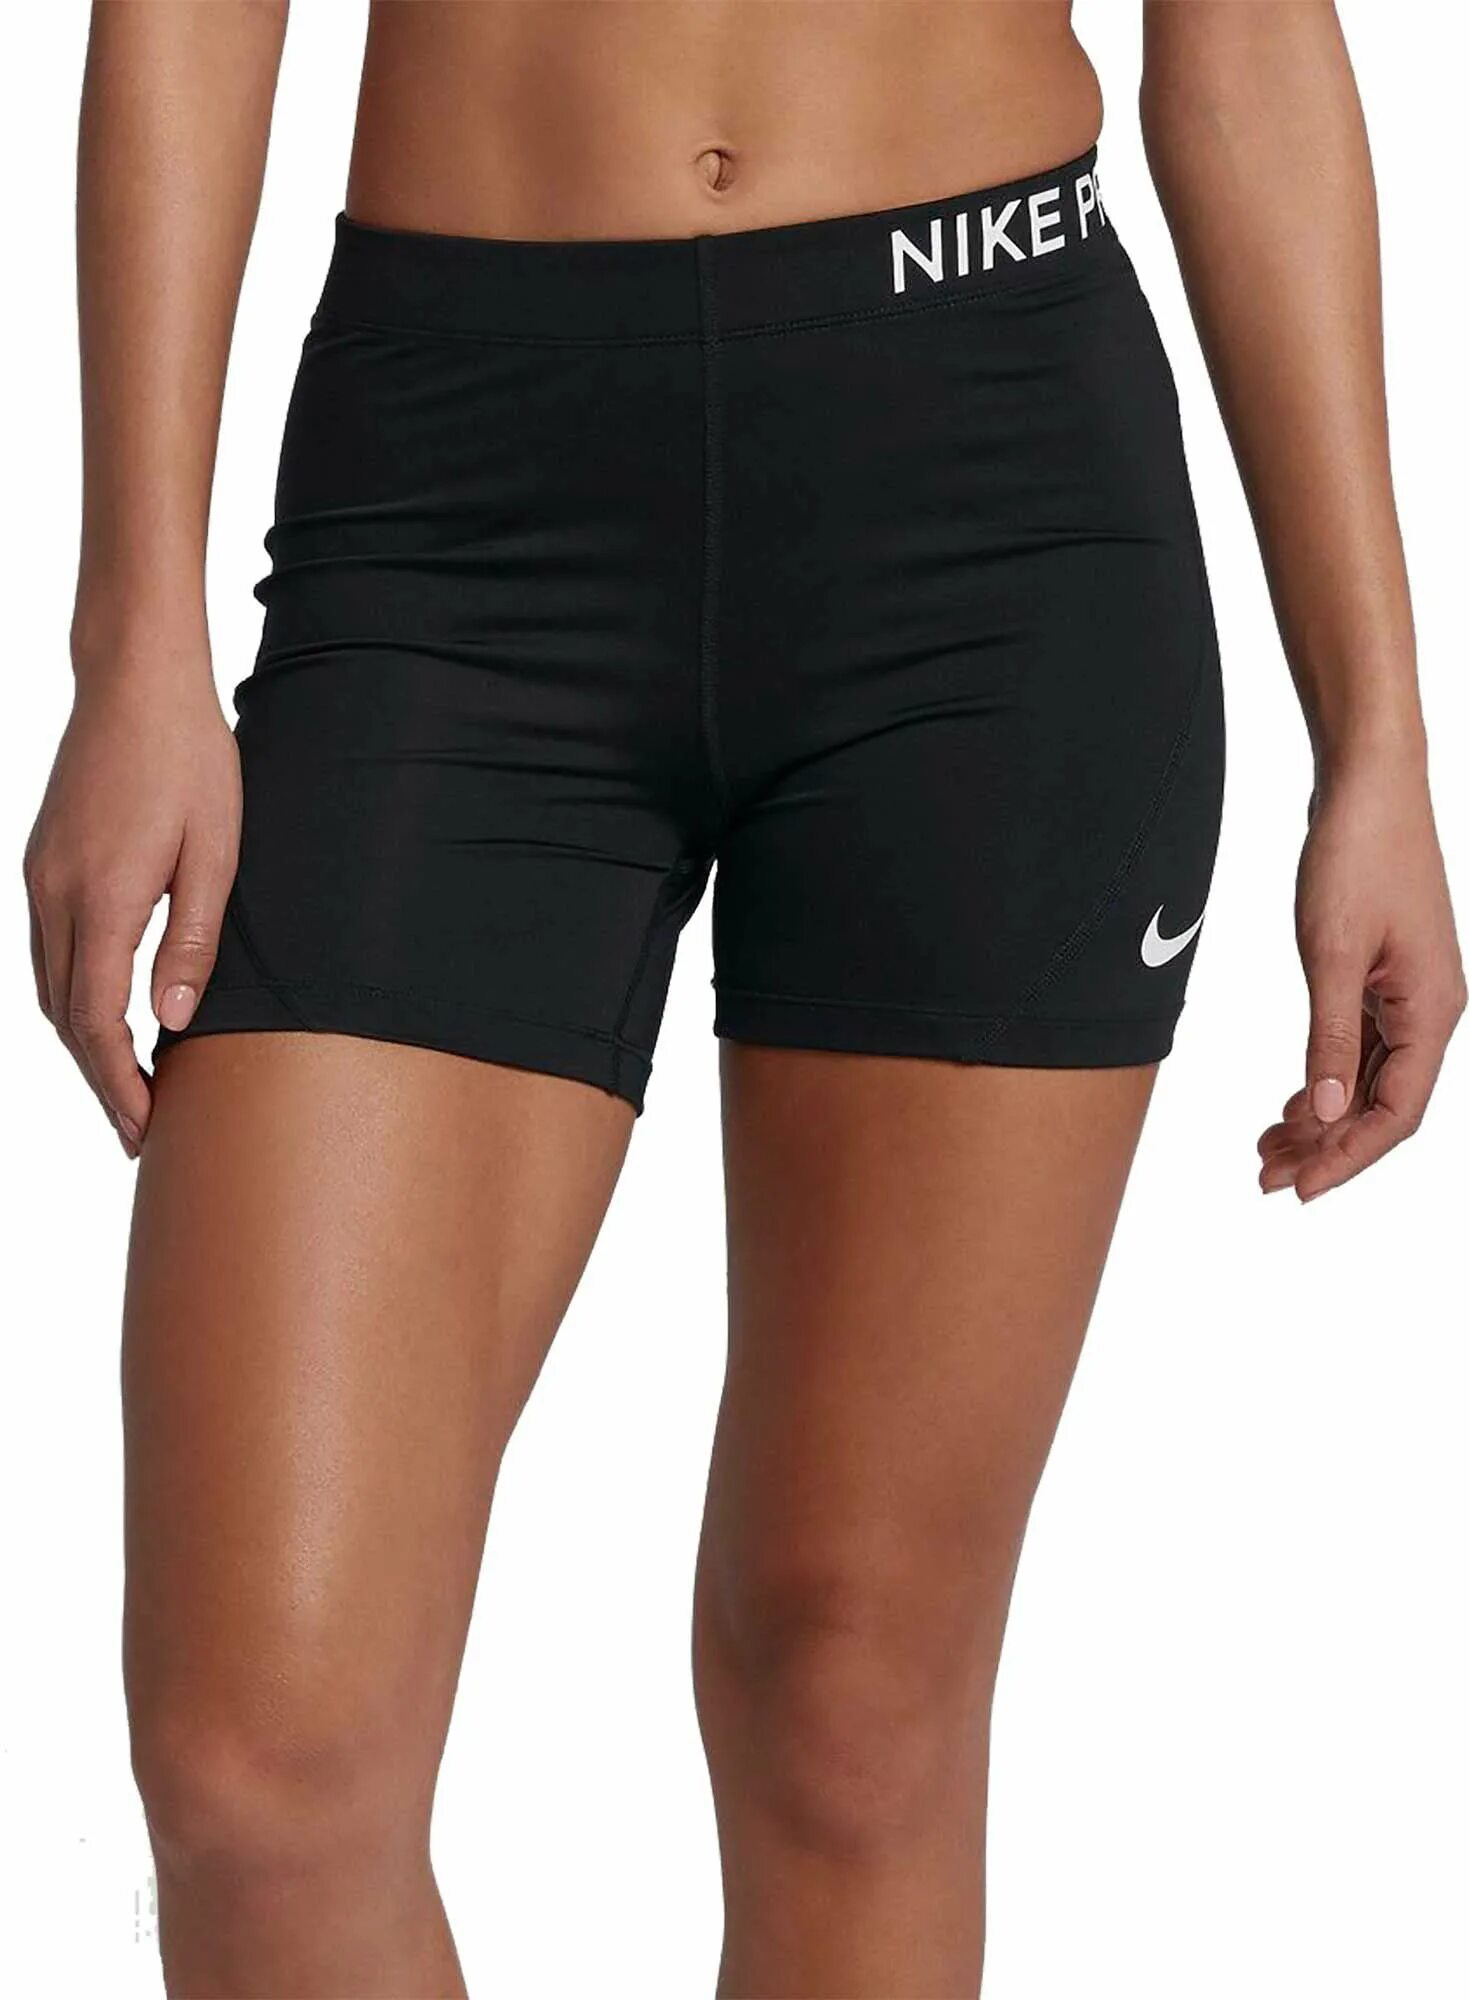 Шорты Nike Pro Dri-Fit. Шорты найк ДРИ фит. Nike шорты Dri-Fit short. Шорты Nike Dri Fit женские.